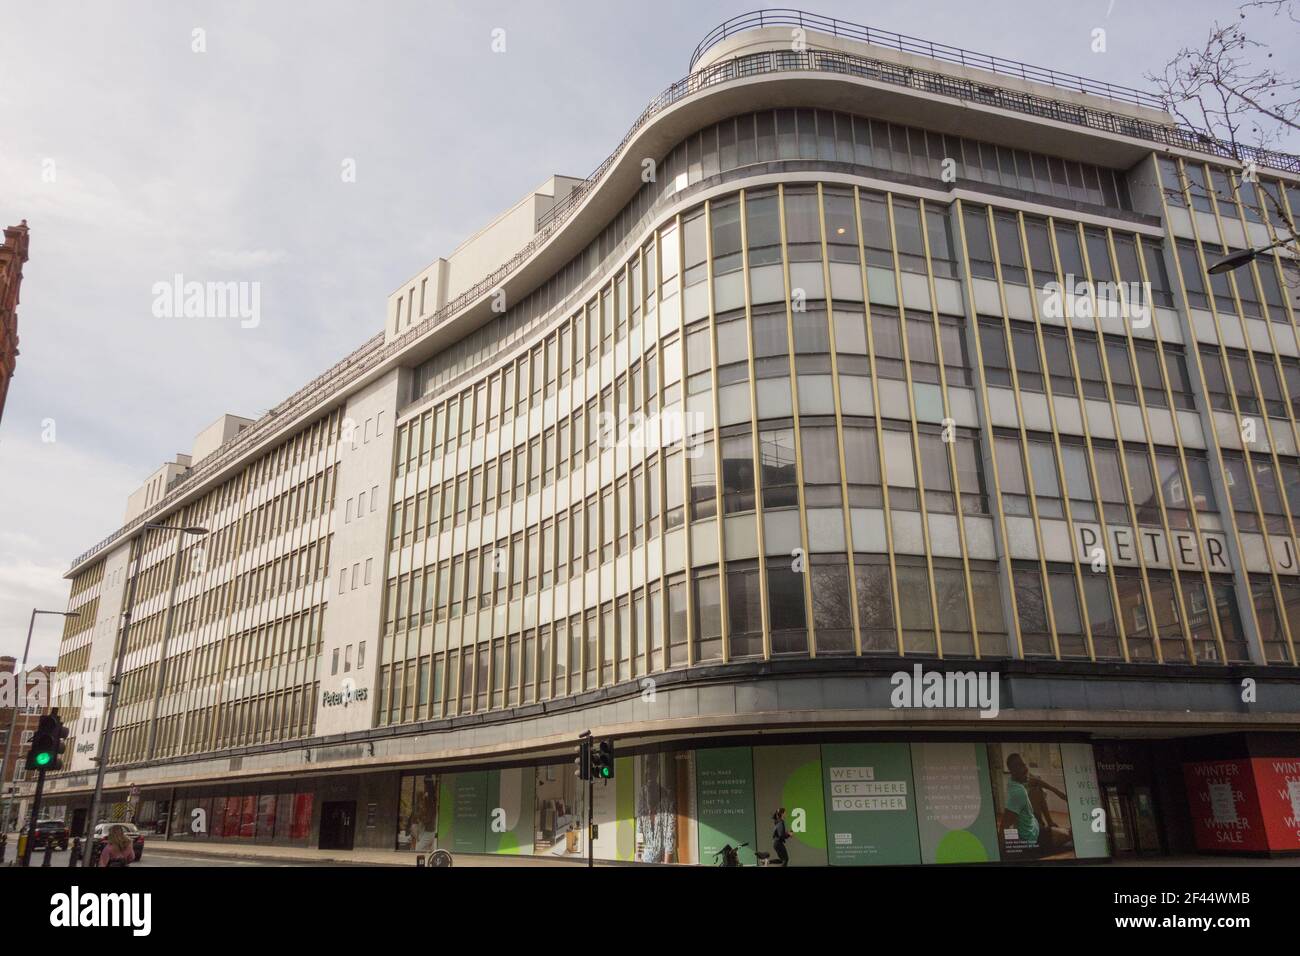 The exterior of the Peter Jones department store, Sloane Square, Chelsea, London, SW1, UK Stock Photo